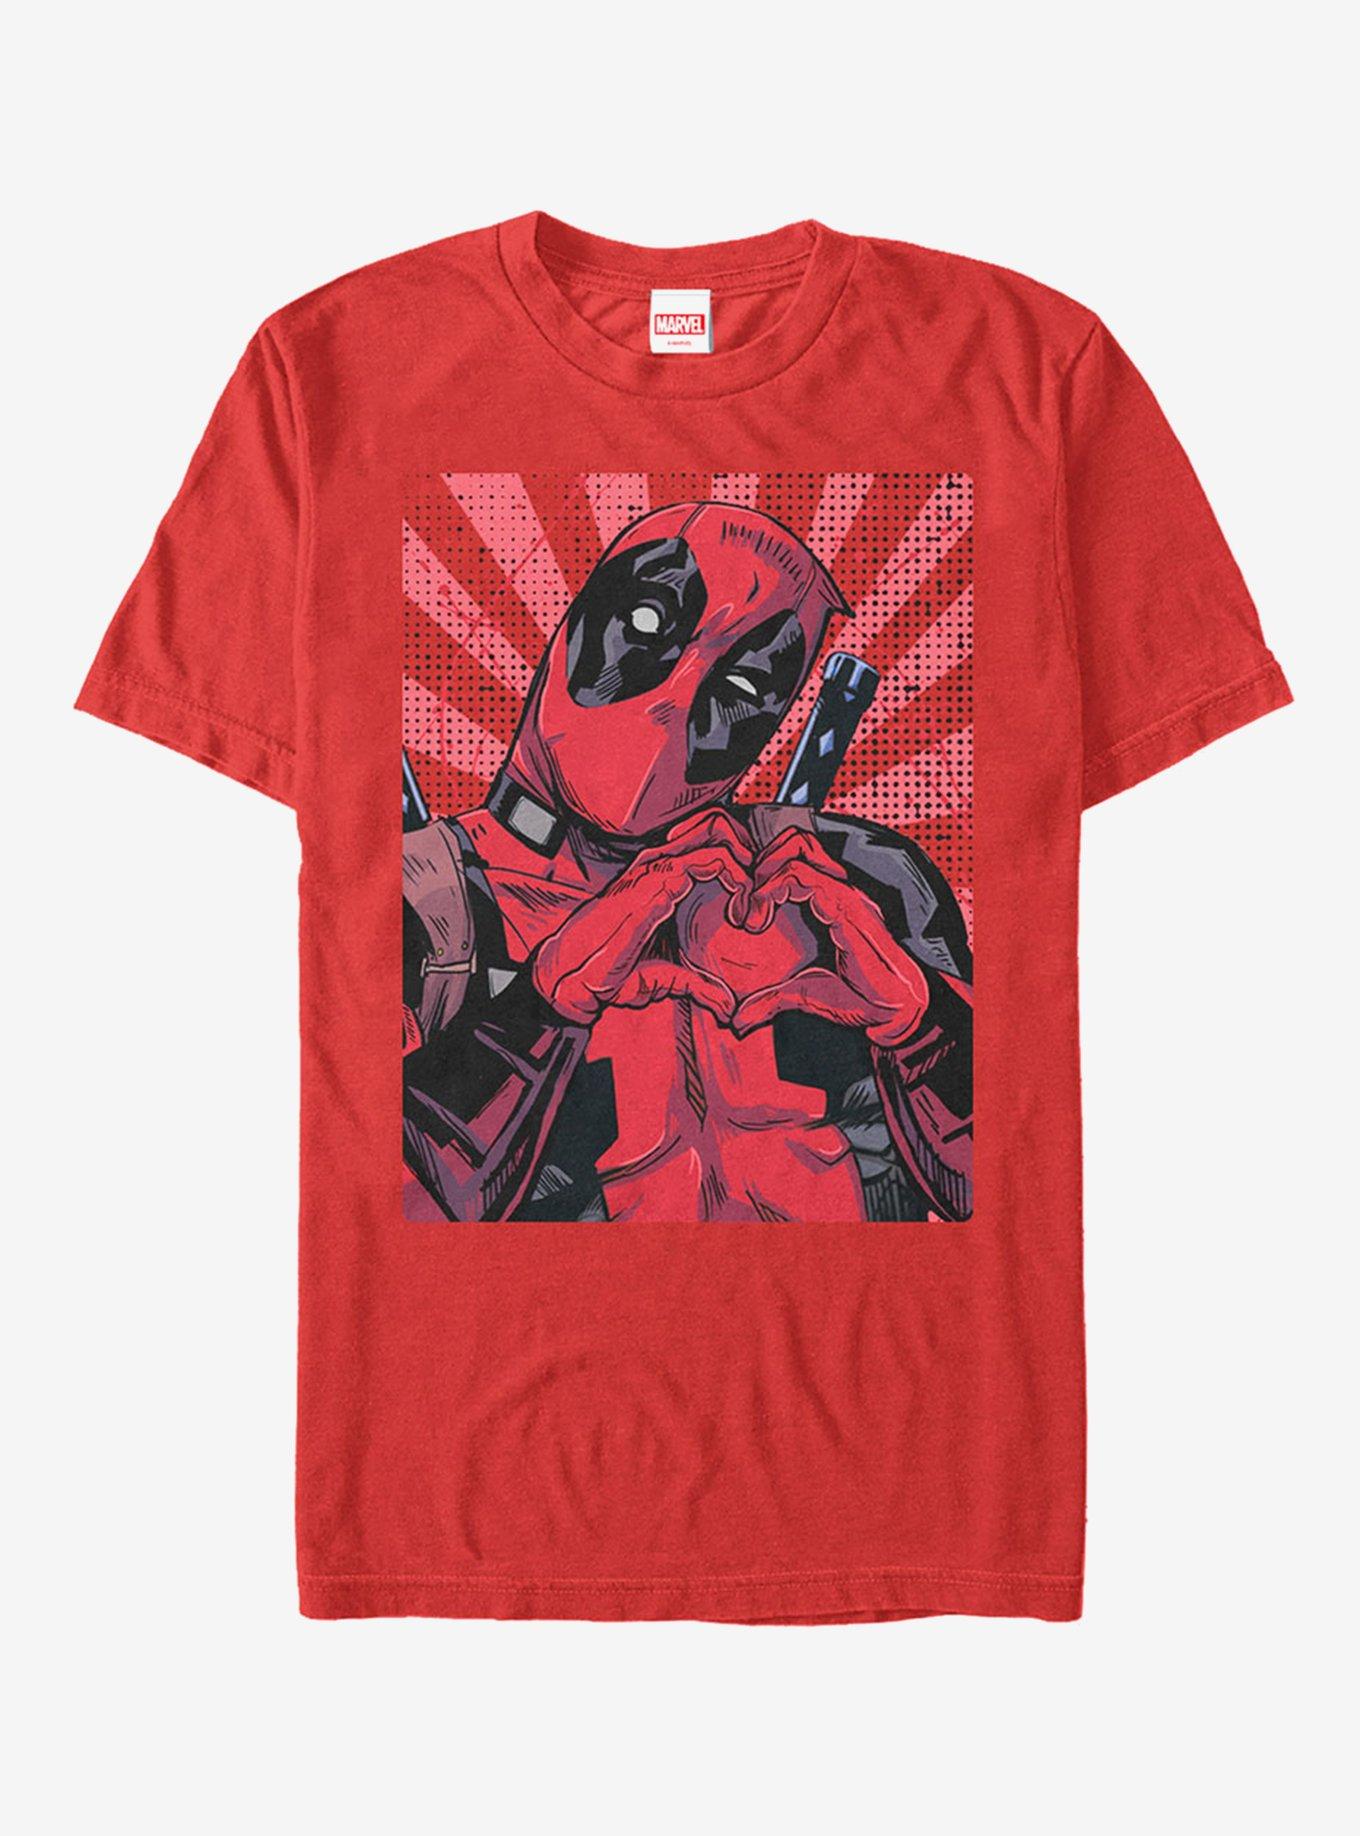 Deadpool * Chimichangas * Marvel * T-Shirt * Red * Men's Size M